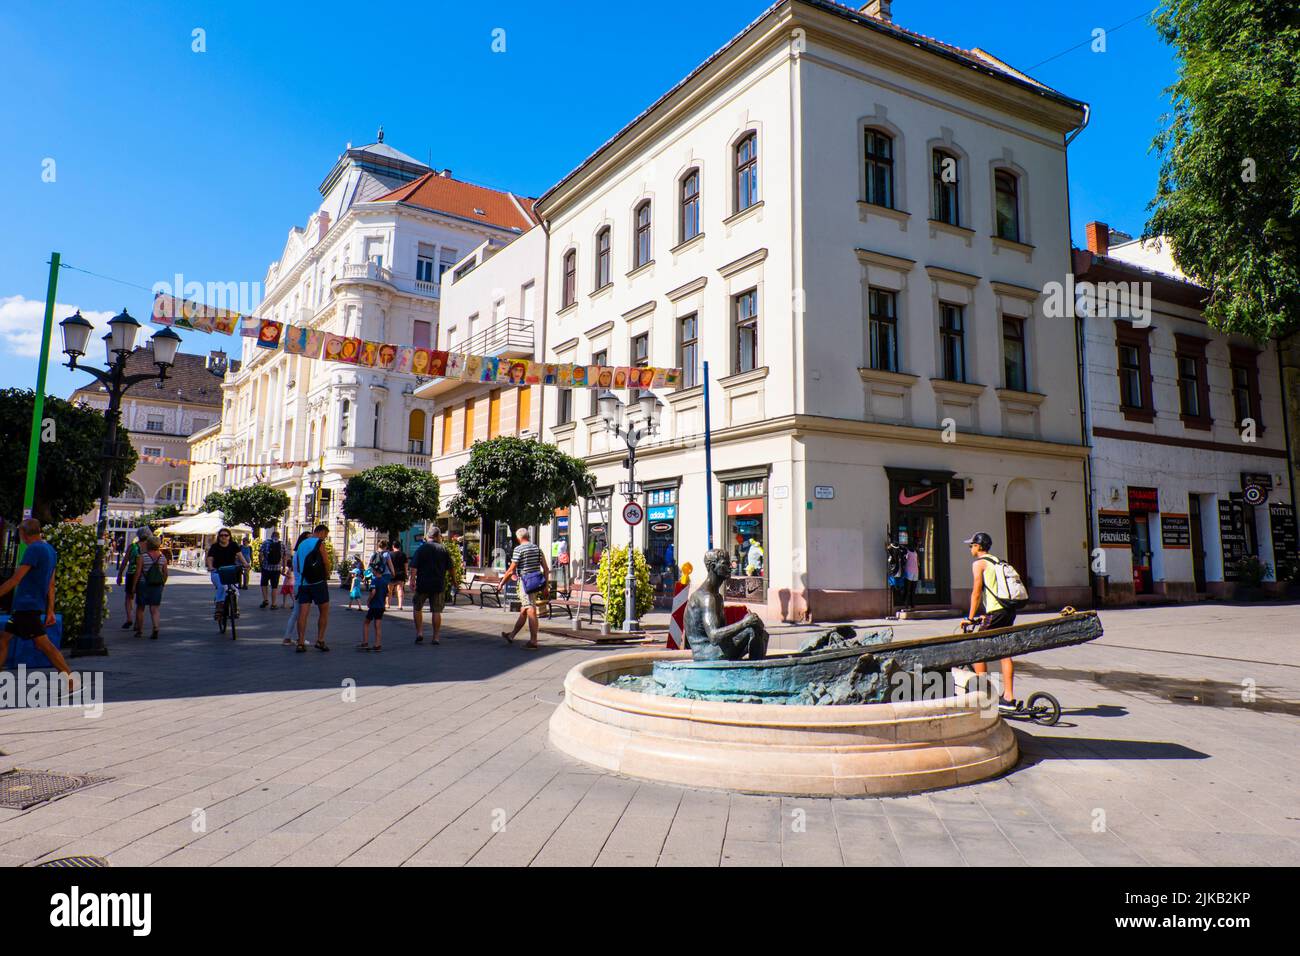 Baross Gabor utca, Gyor, Hungary Stock Photo